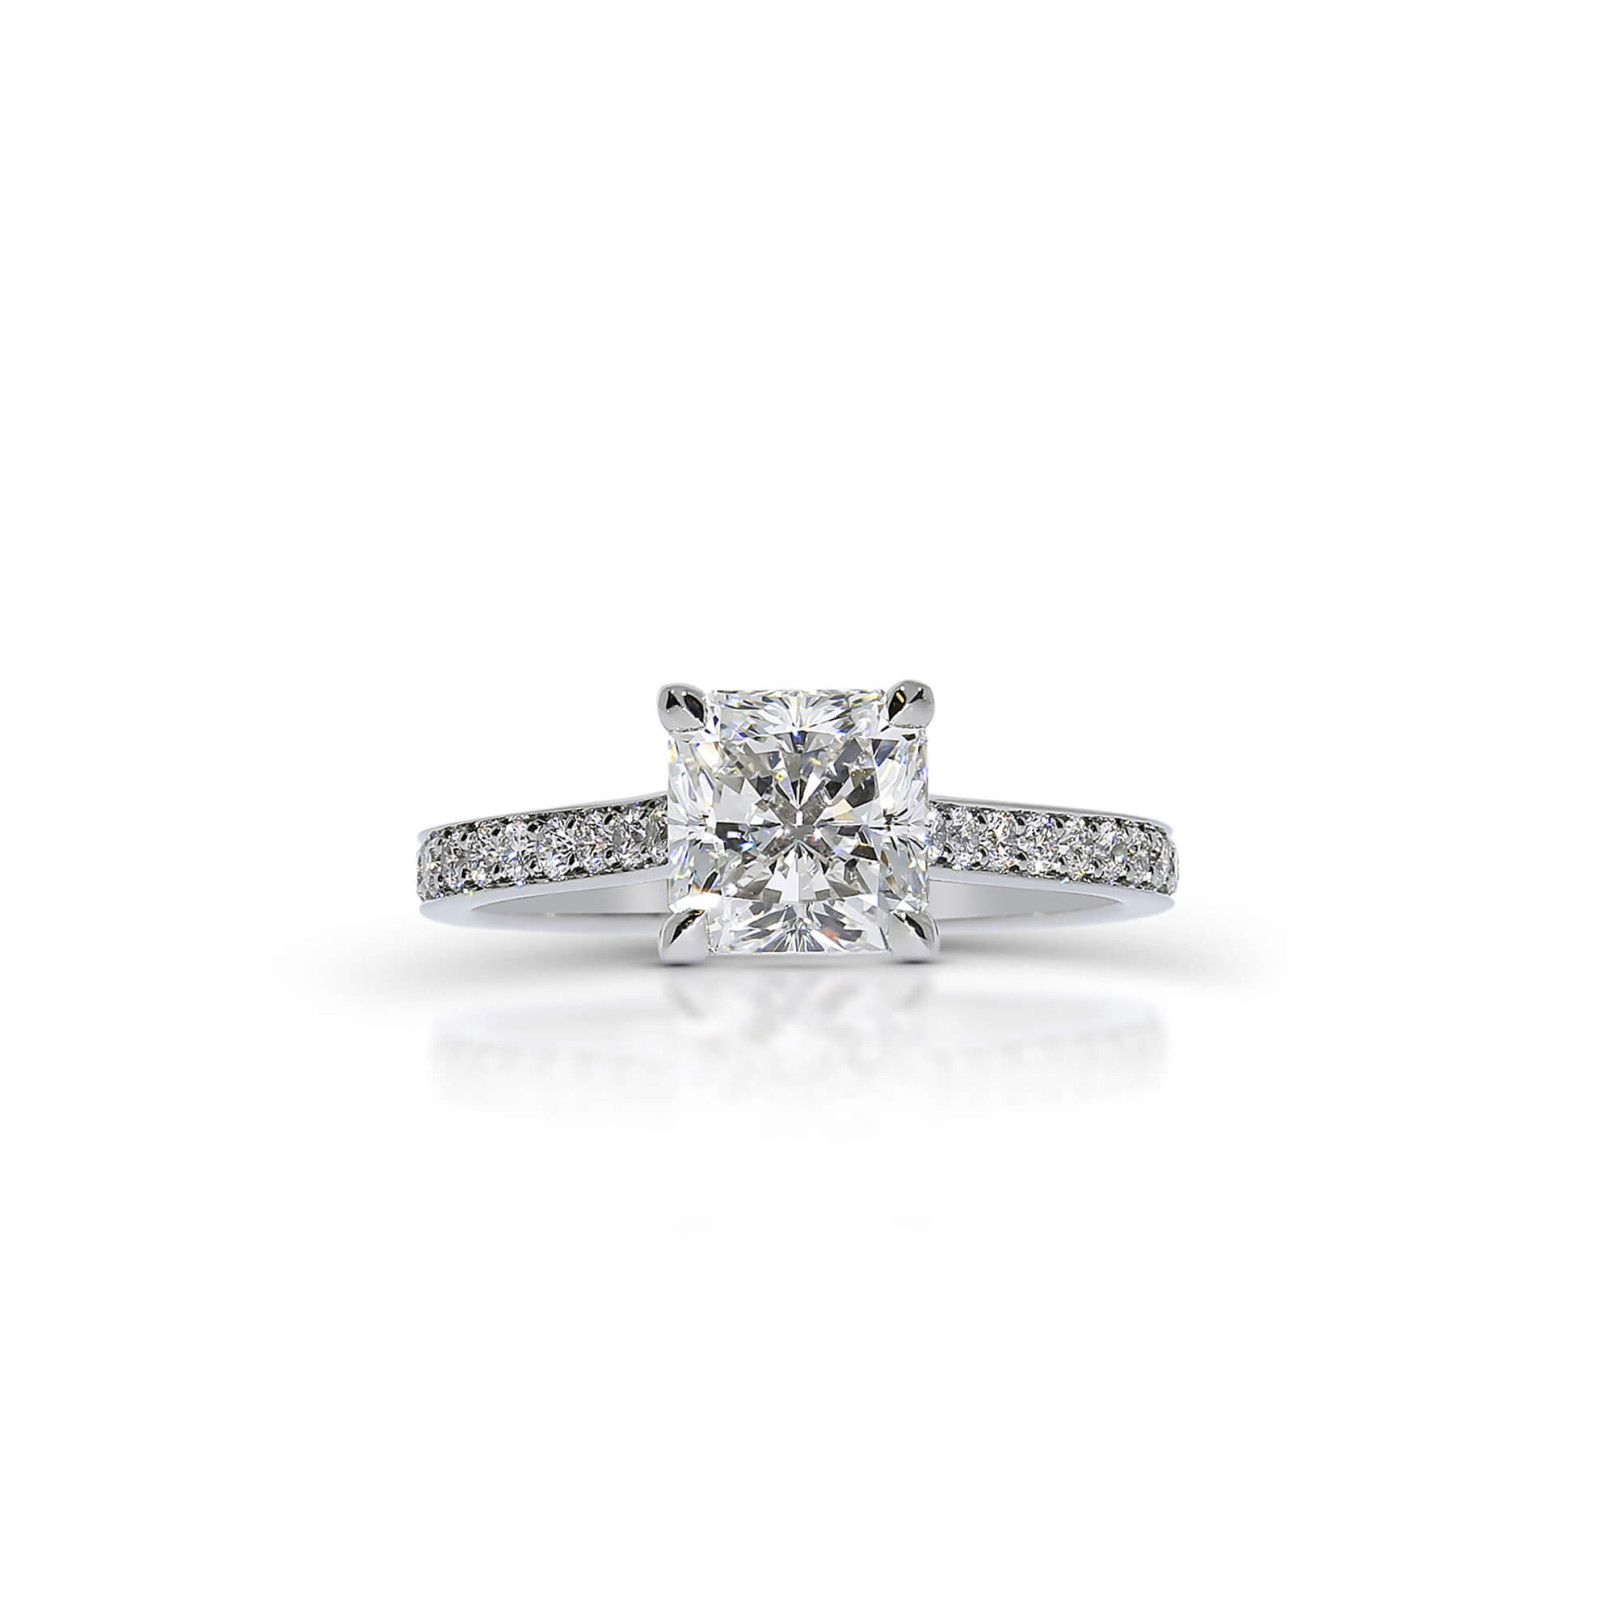 Radiant Cut Diamond Engagement Ring with Pavé Set Diamond Band